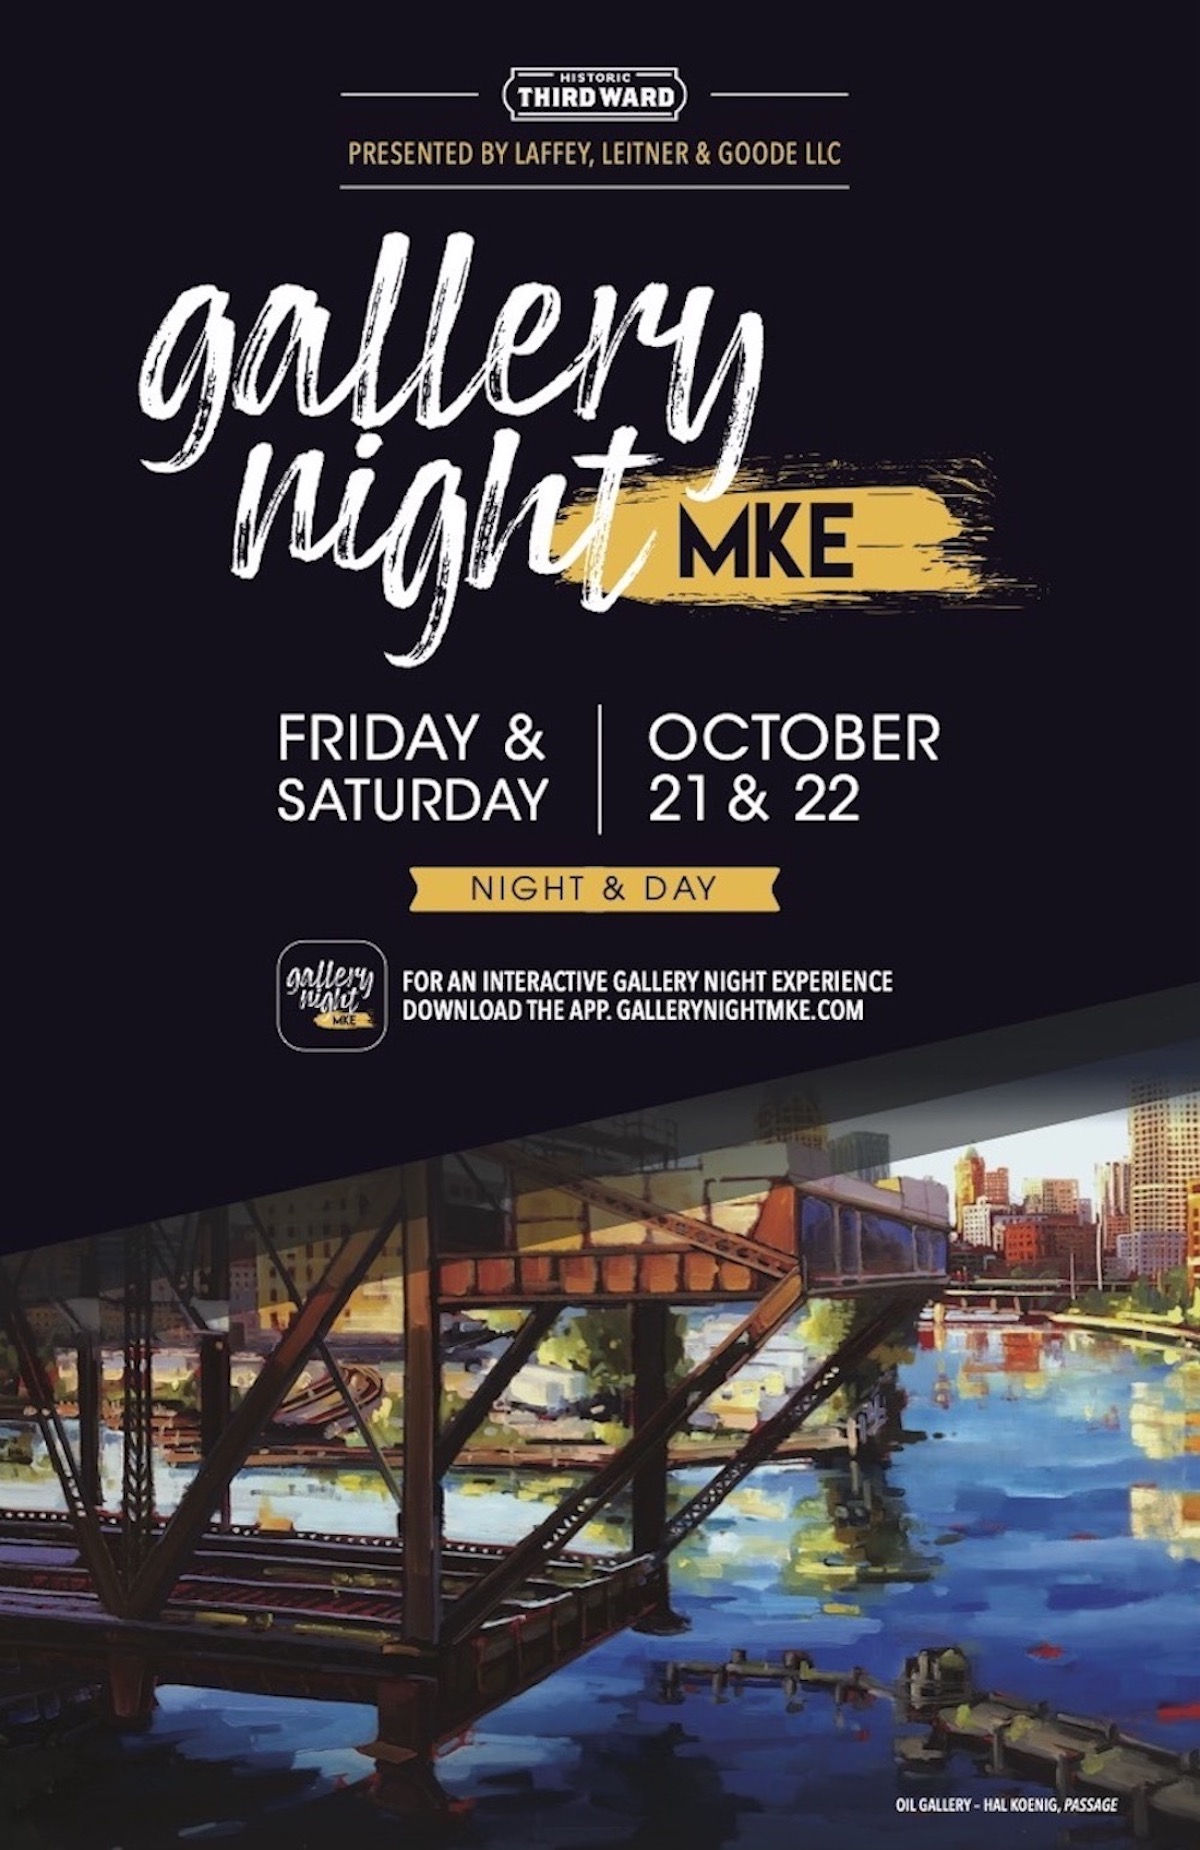 Fall Gallery Night MKE unites Milwaukee’s downtown neighborhoods through art Oct. 21-22